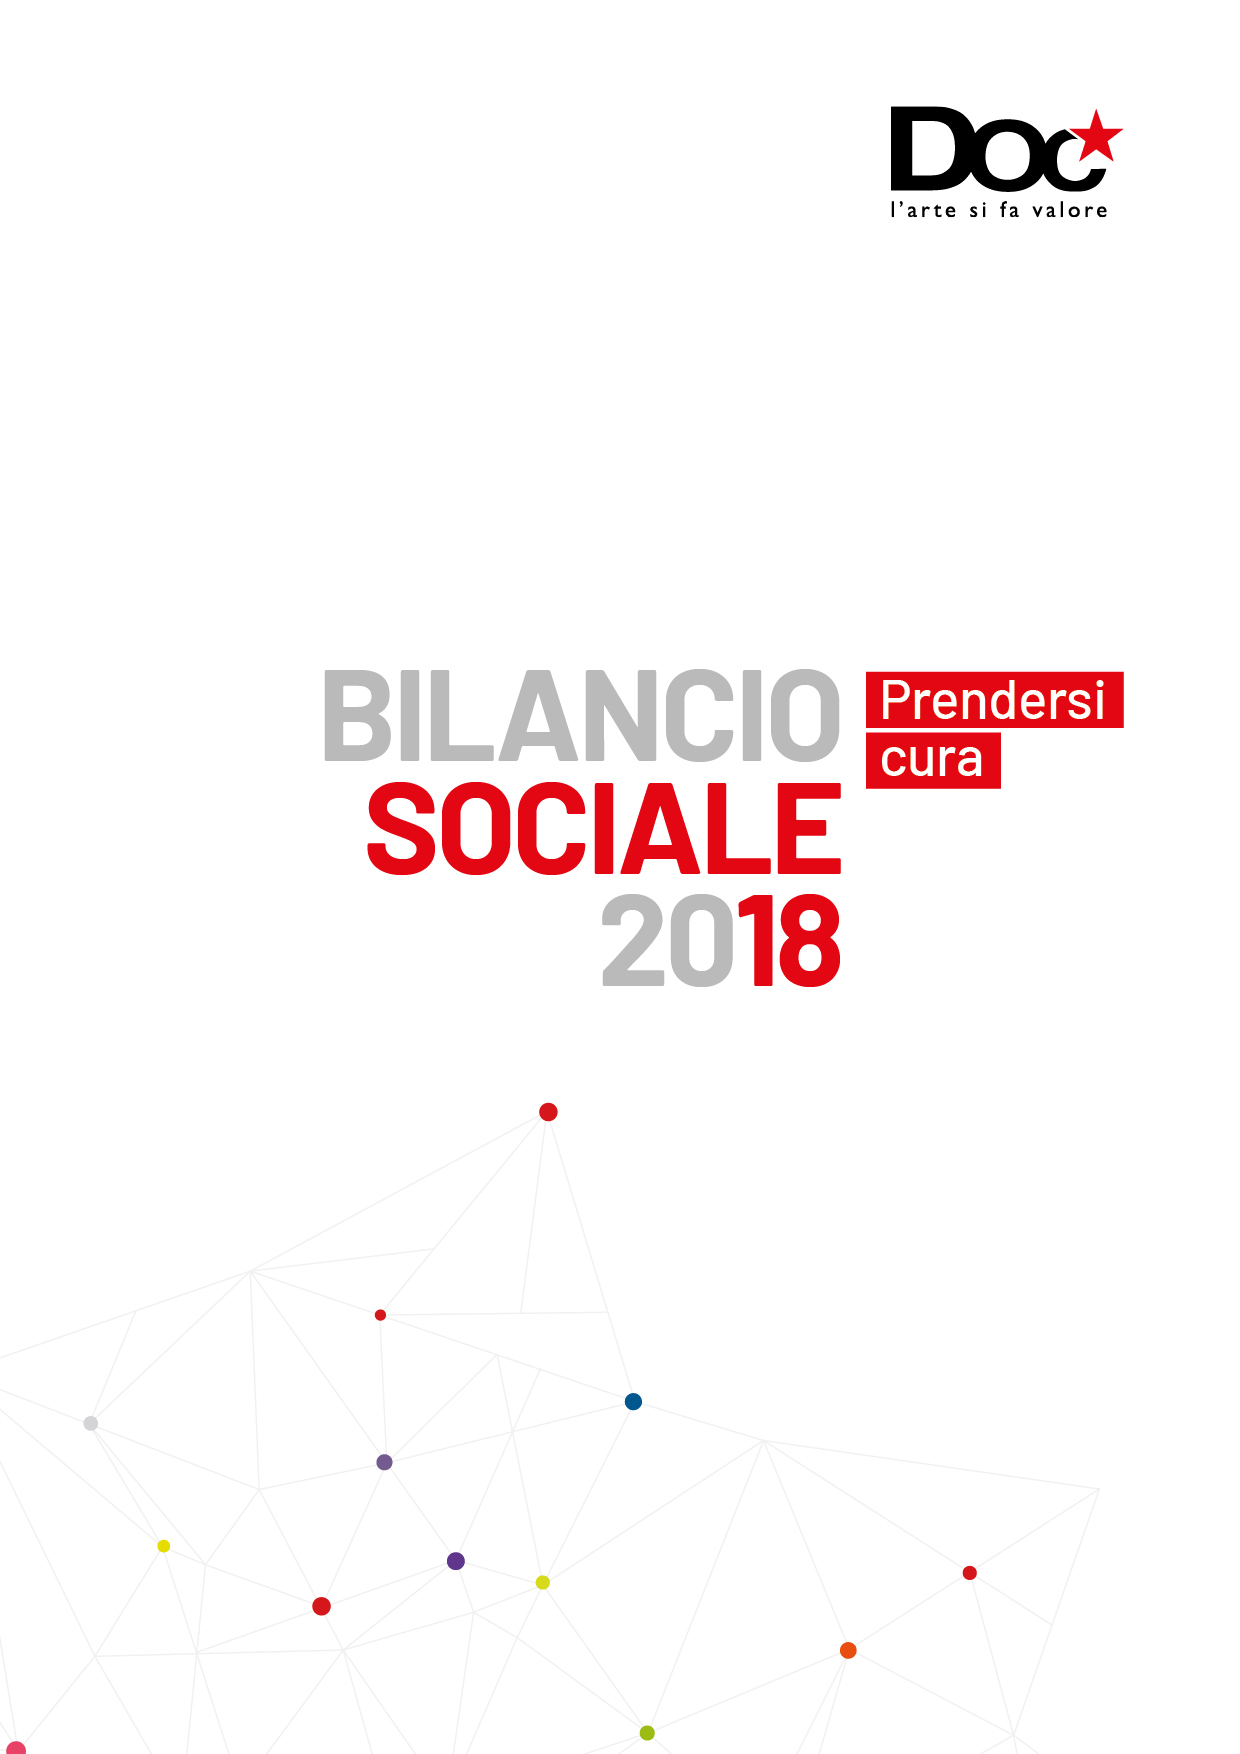 Rete Doc Bilancio Sociale 2018